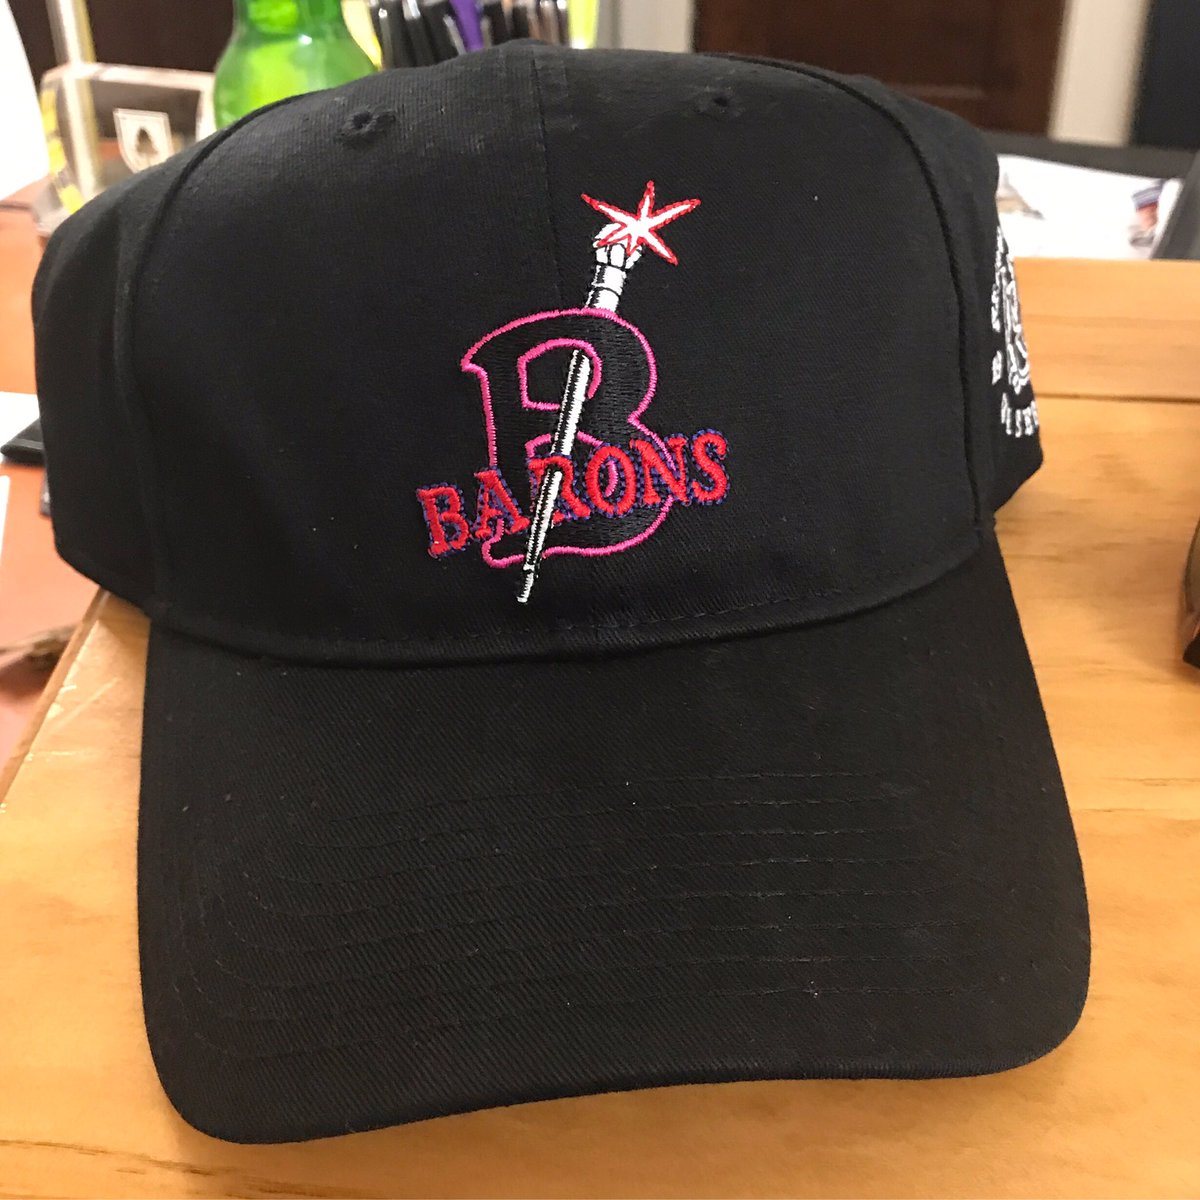 Breaking in a new cap for #AllStarGame2019. #ASG19 #BirminghamBlackBarons #MLB @nlbmprez